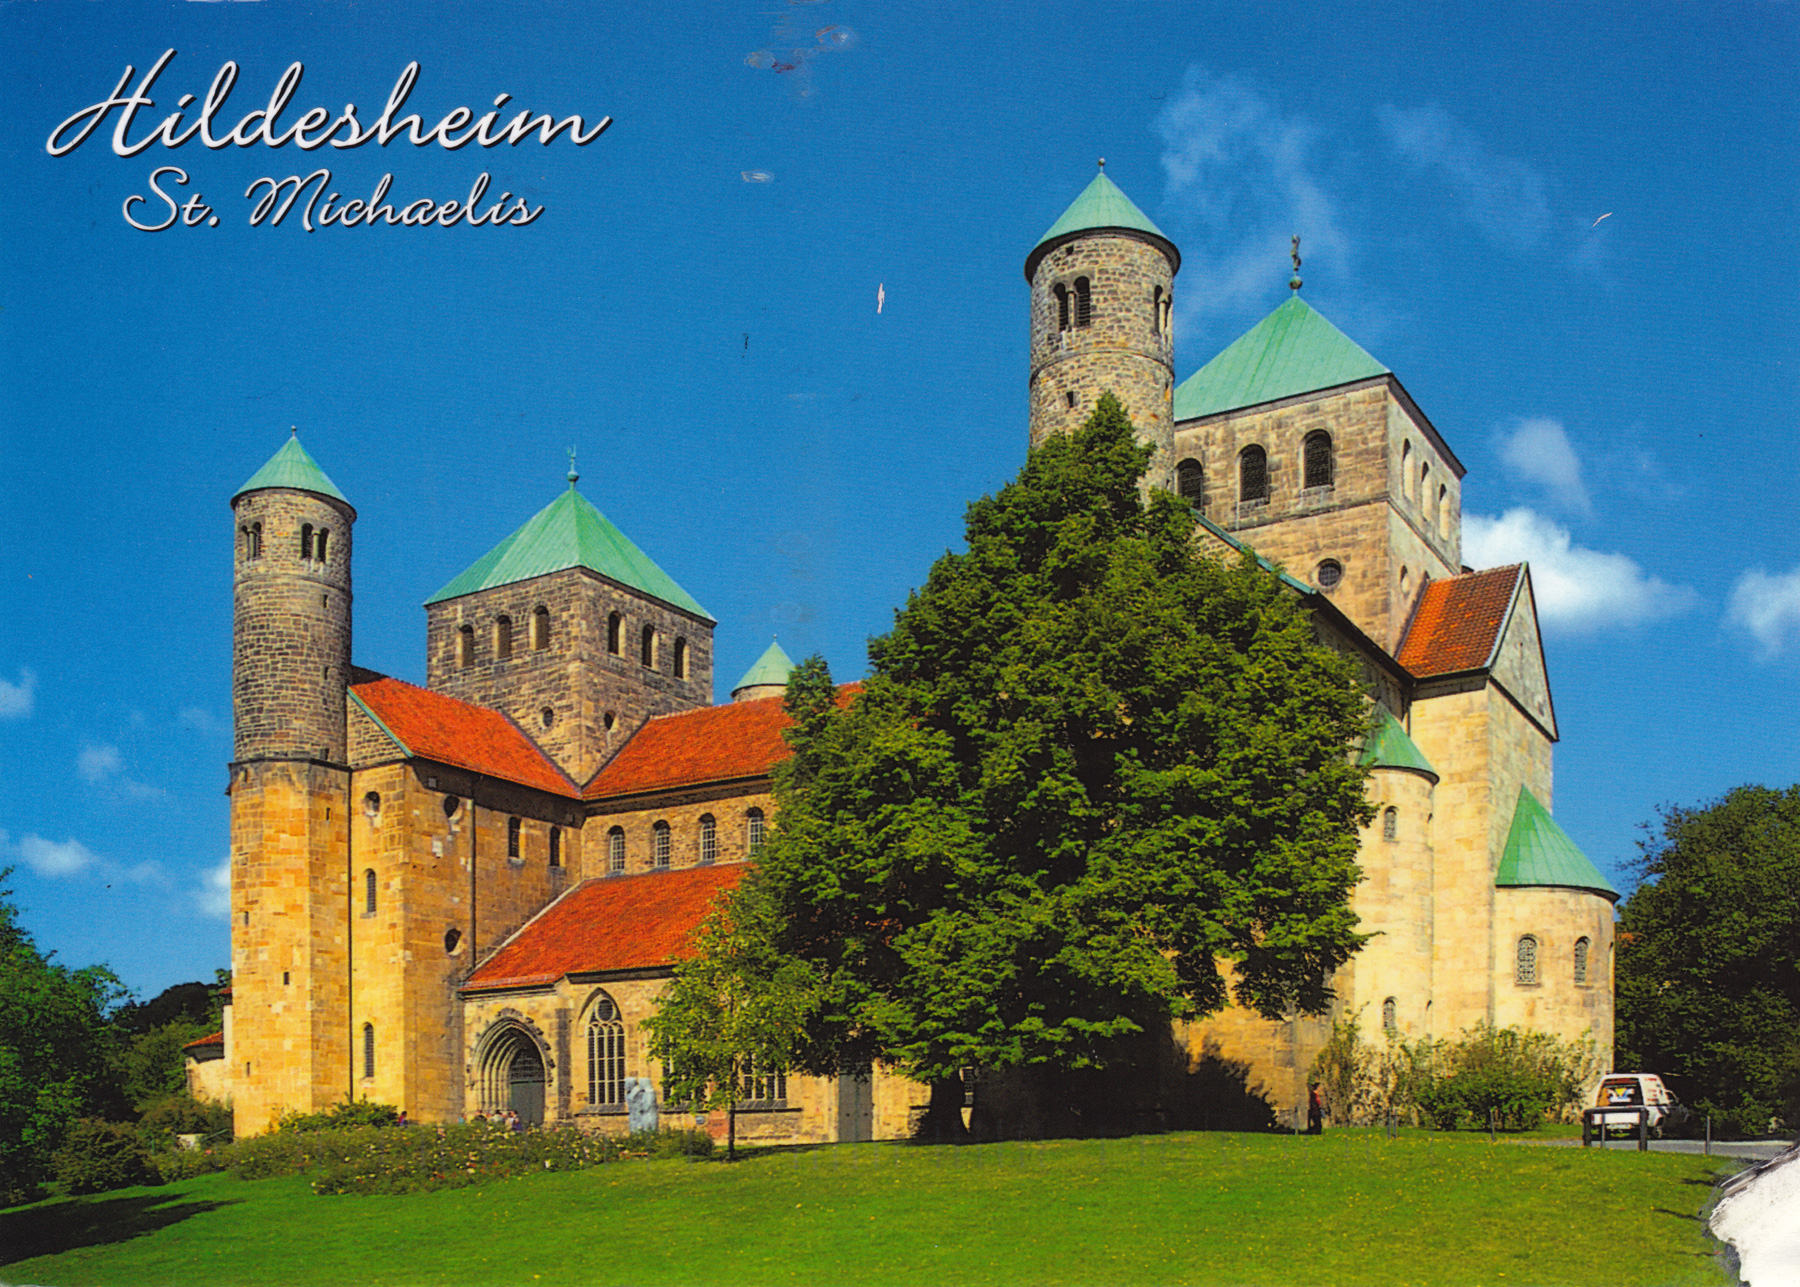 Hildesheim dating